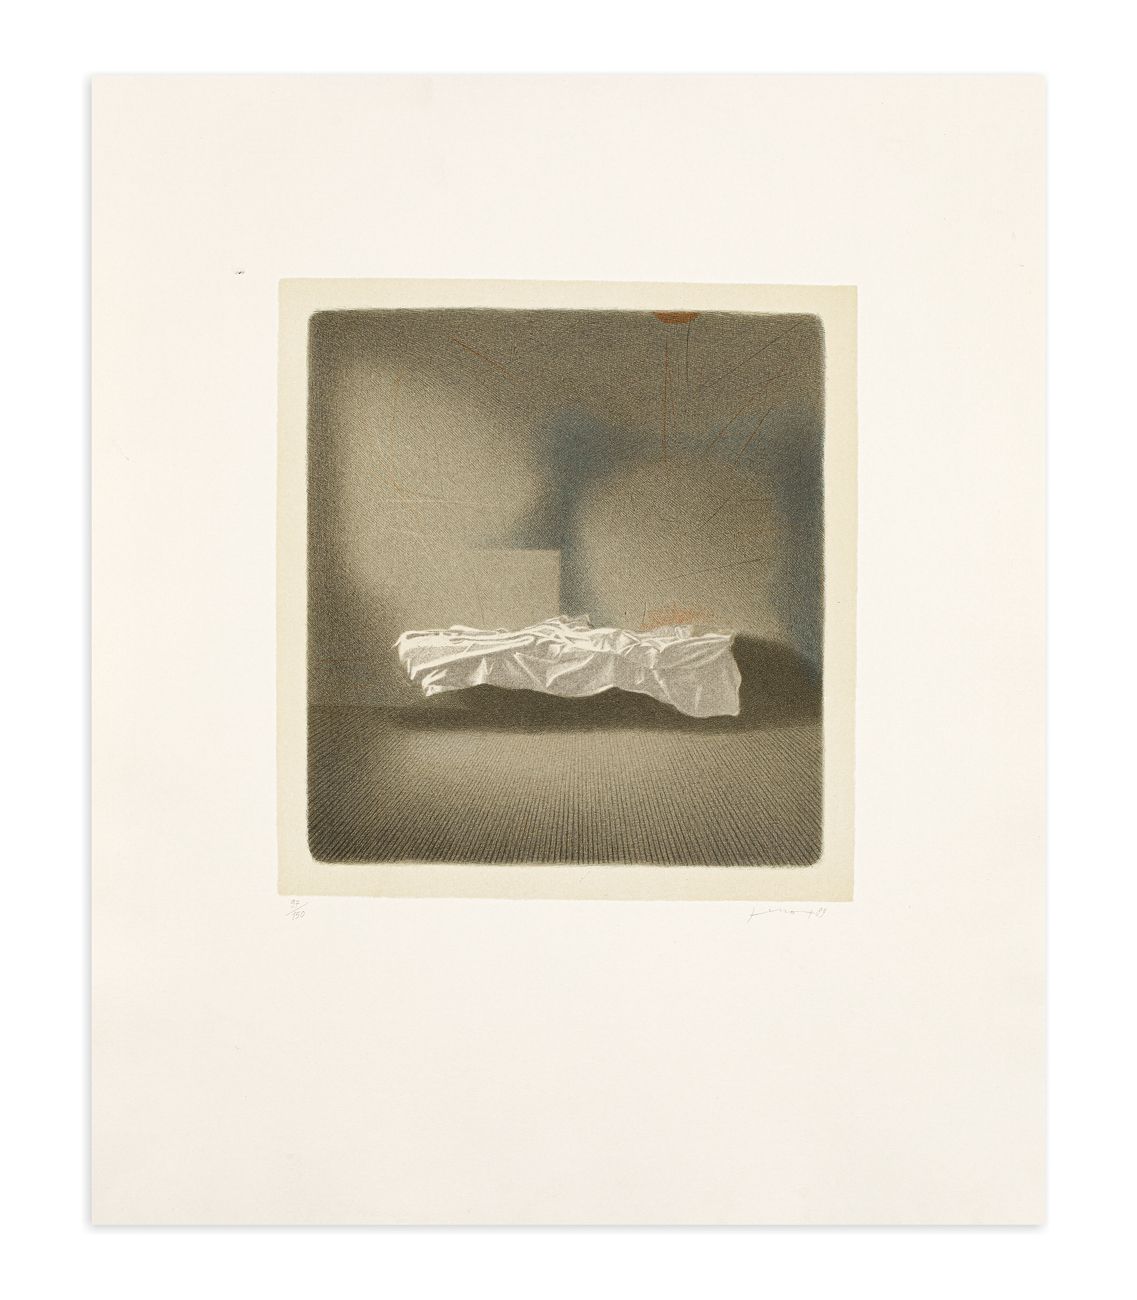 GIANFRANCO FERRONI (1927-2001) - Lettino, 1989 Lithographie sur fond

60x50 cm

&hellip;